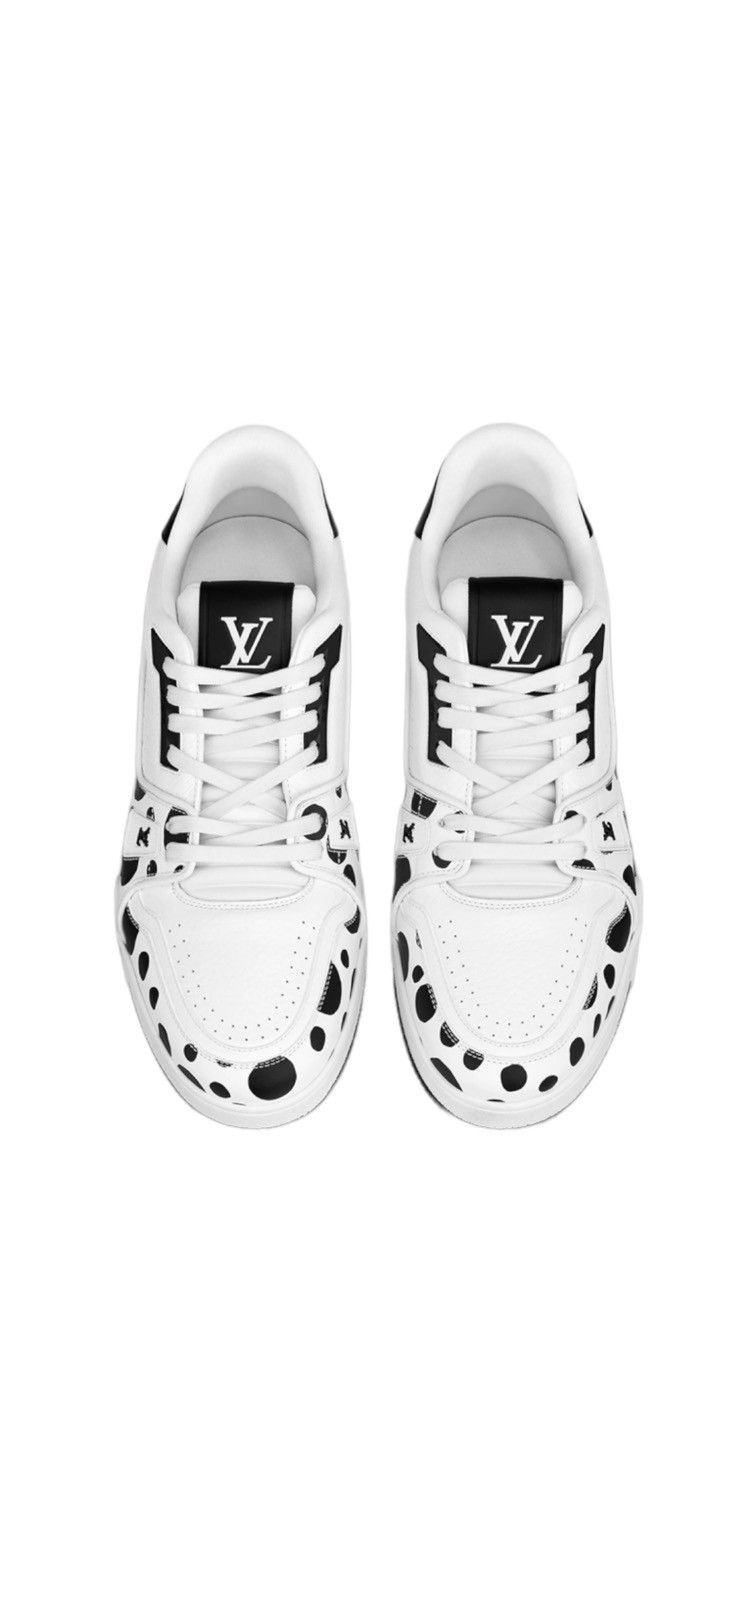 Louis Vuitton Louis Vuitton X Yayoi Kasasma Sneakers Size US 7.5 / EU 40-41 - 2 Preview